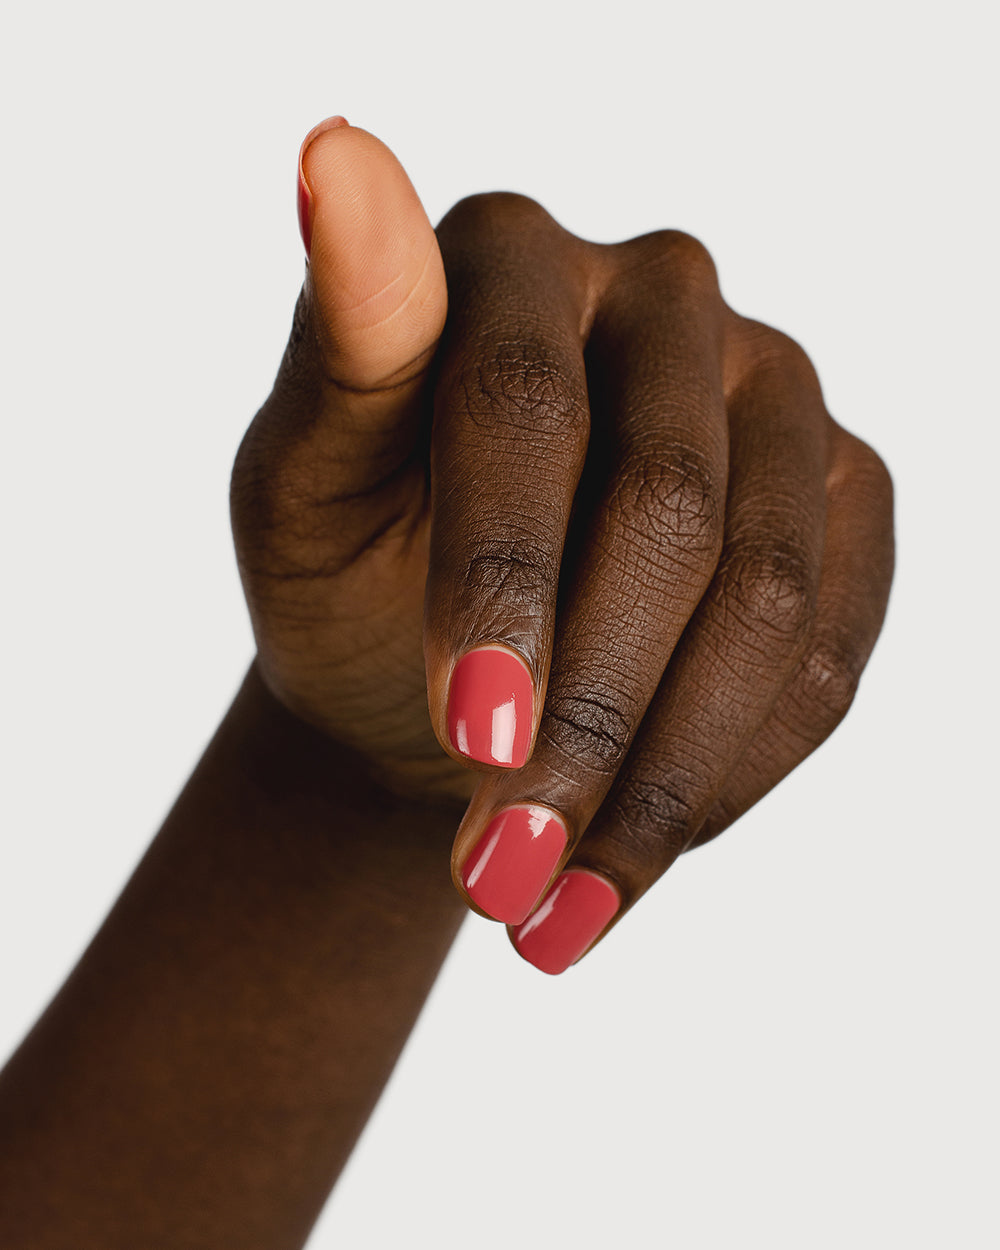 dusty rosebud nail polish hand swatch on dark skin tone